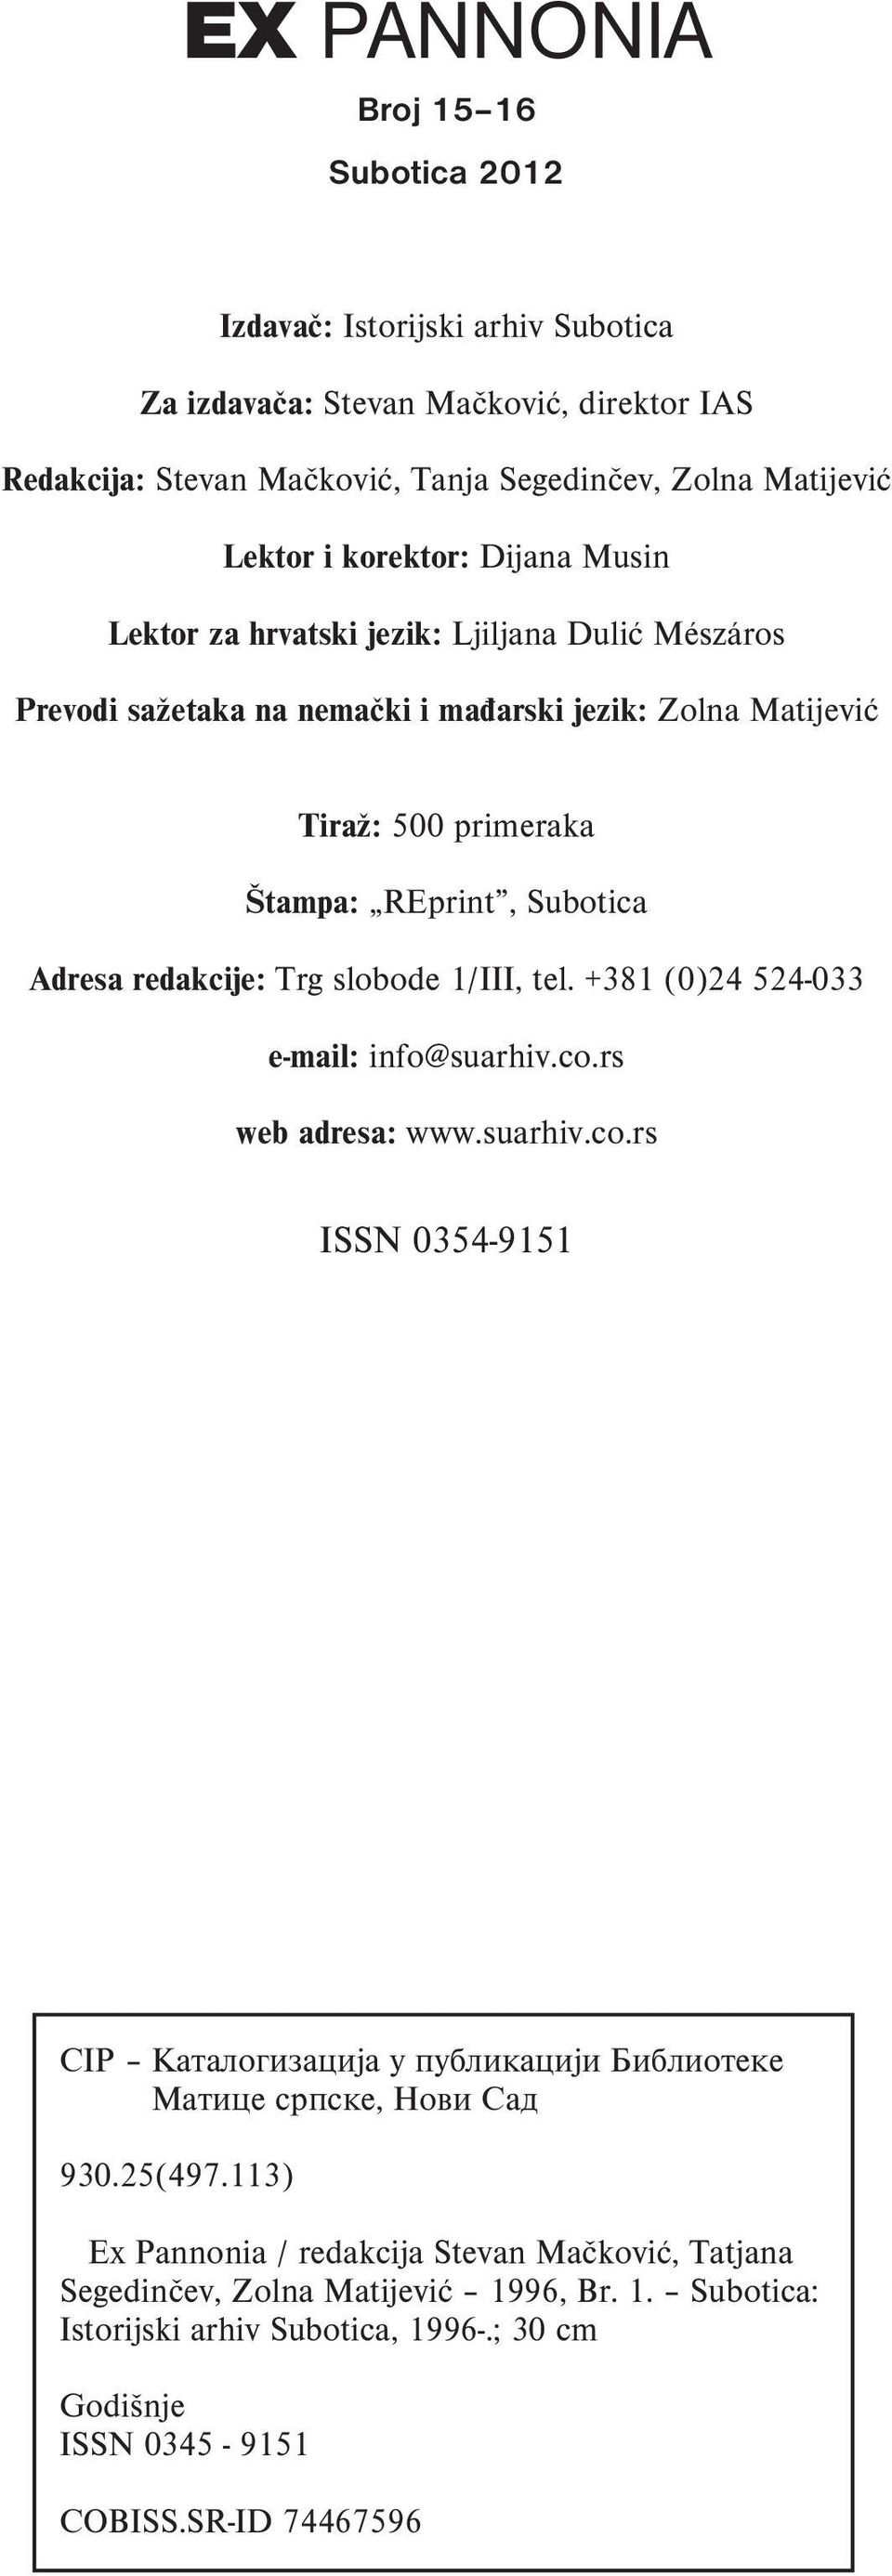 REprint, Subotica Adresa redakcije: Trg slobode 1/III, tel. +381 (0)24 524-033 e-mail: info@suarhiv.co.rs web adresa: www.suarhiv.co.rs ISSN 0354-9151 CIP, 930.25(497.